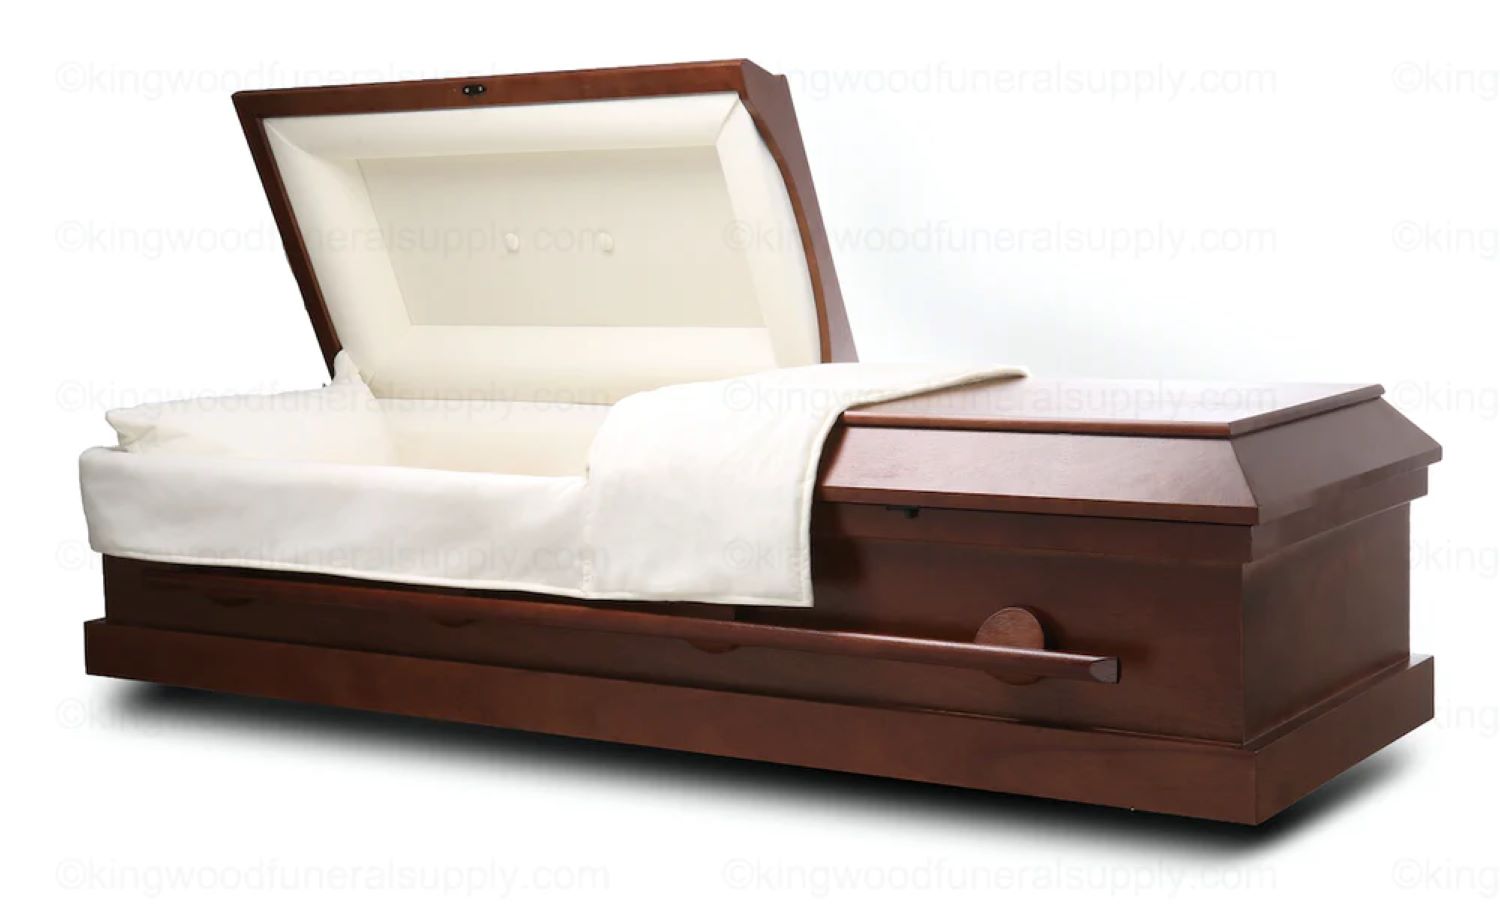 Picture of CARINA - Wood Veneer Cremation or Burial Casket Casket